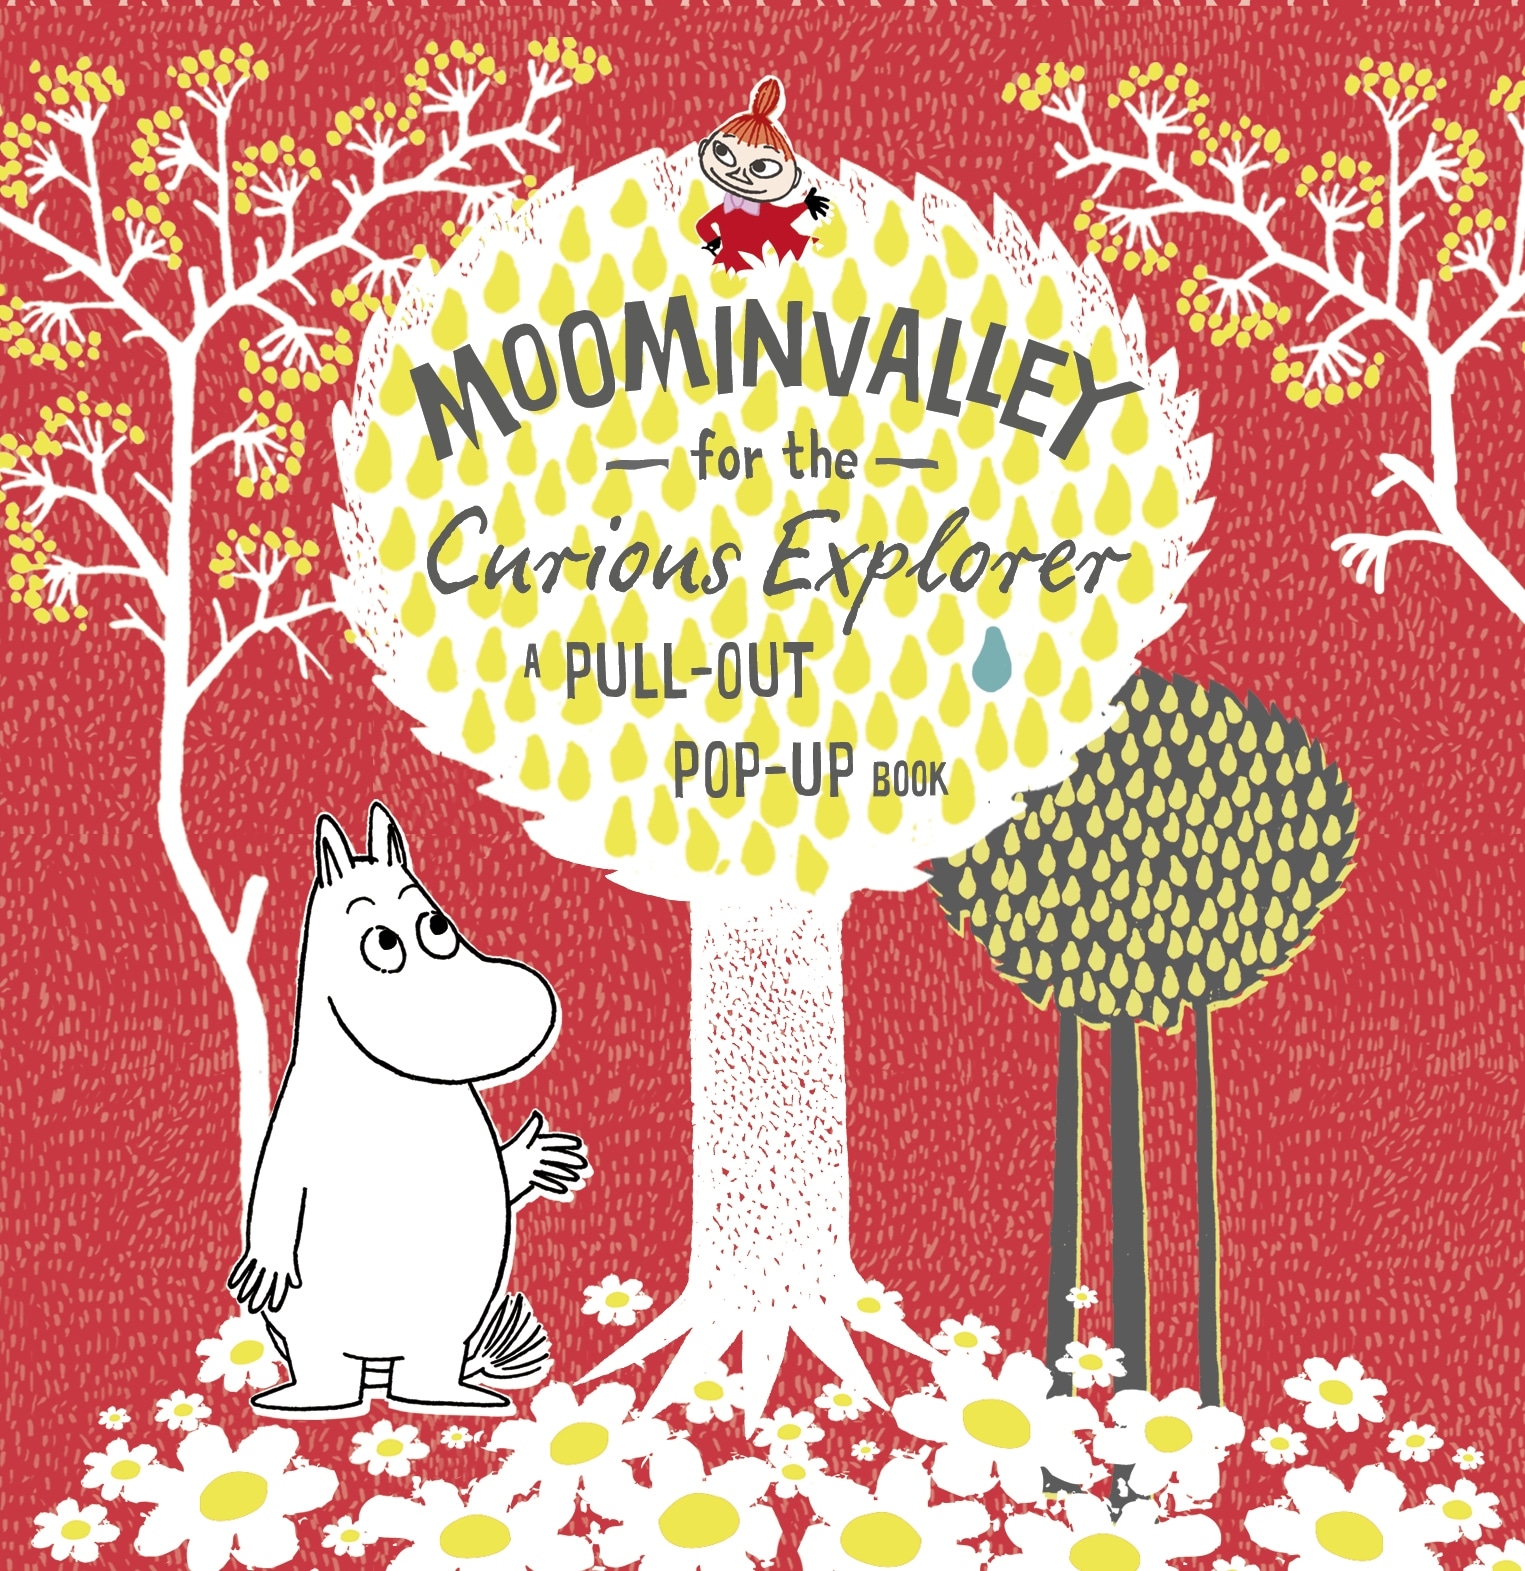 Книга «Moominvalley for the Curious Explorer» Tove Jansson — 3 июля 2014 г.